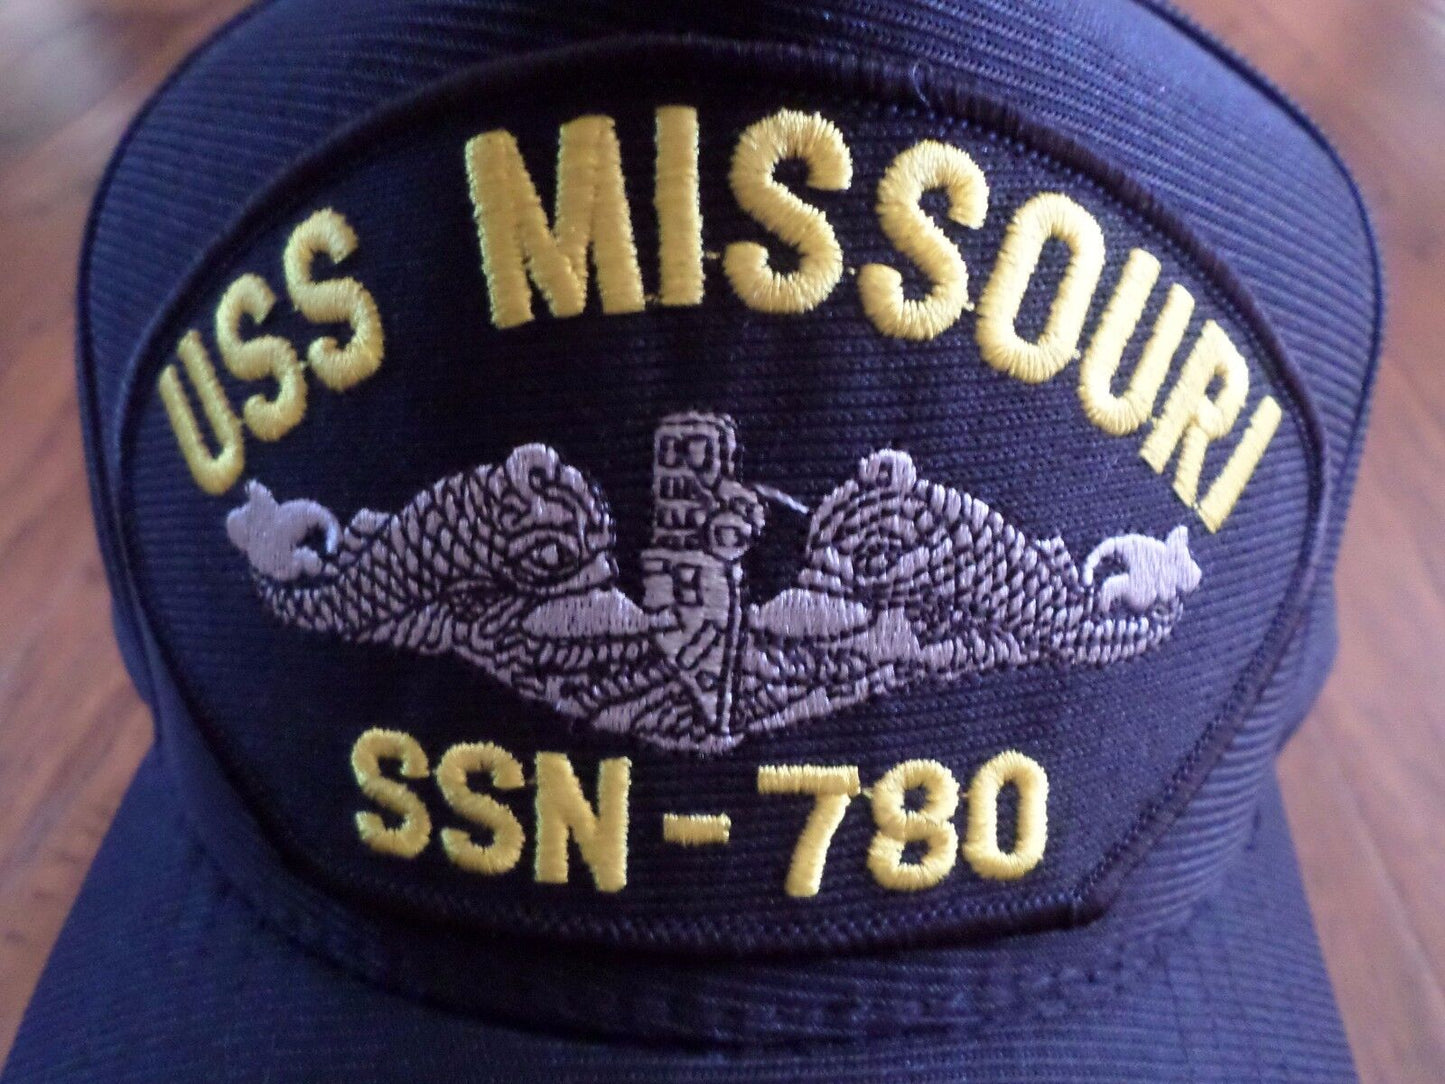 USS MISSOURI SSN 780 NAVY SUBMARINE HAT U.S MILITARY OFFICIAL BALL CAP USA MADE